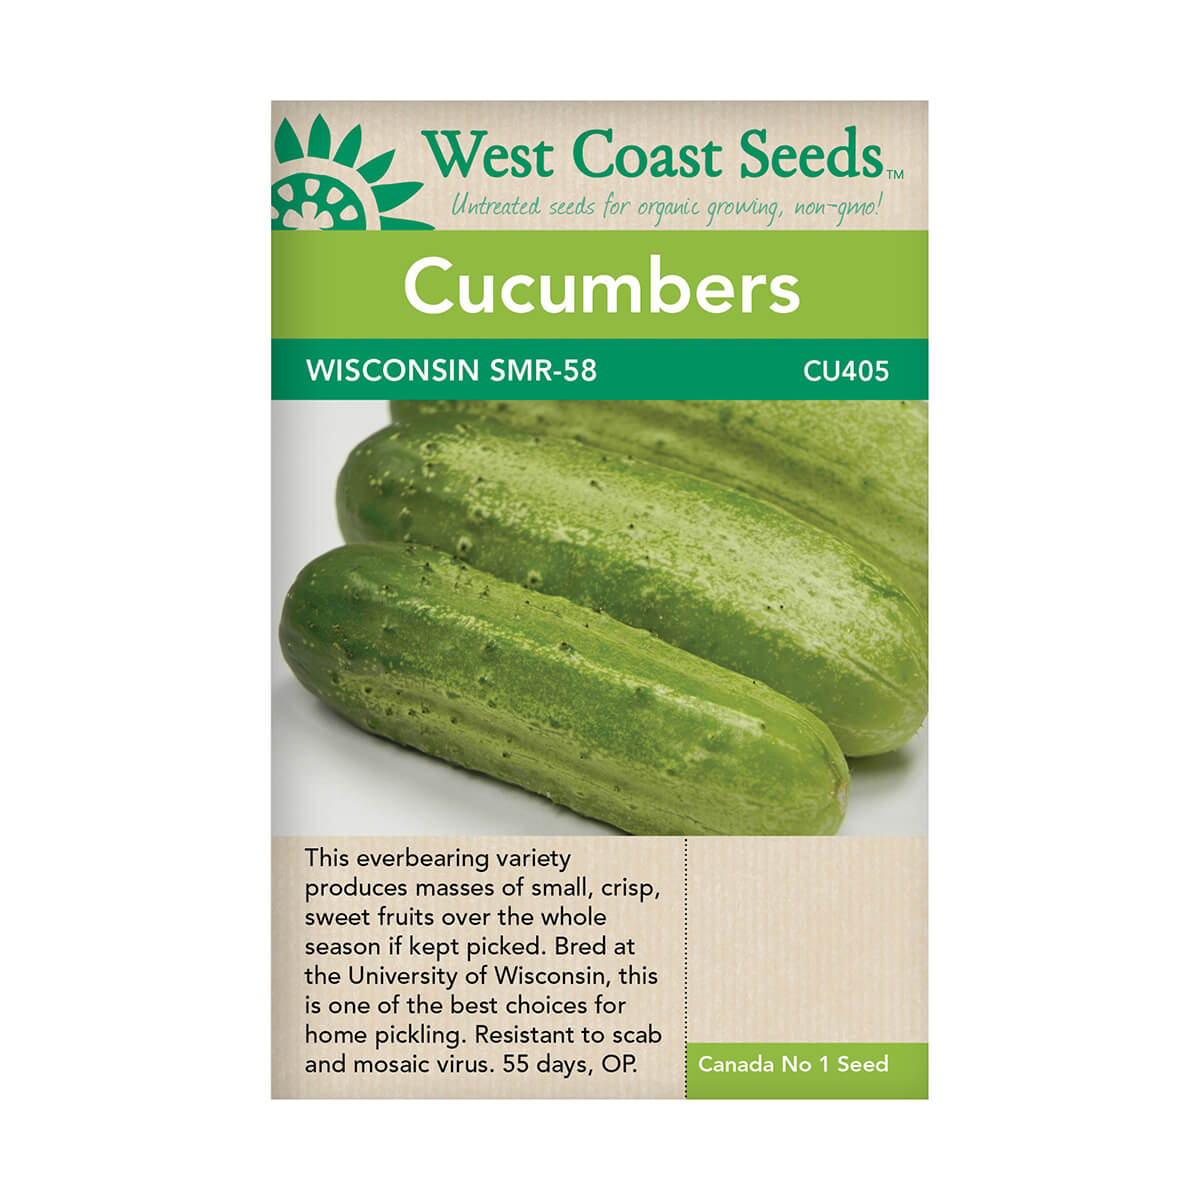 Wisconsin SMR-58 Cucumber Seeds - approx. 17 seeds